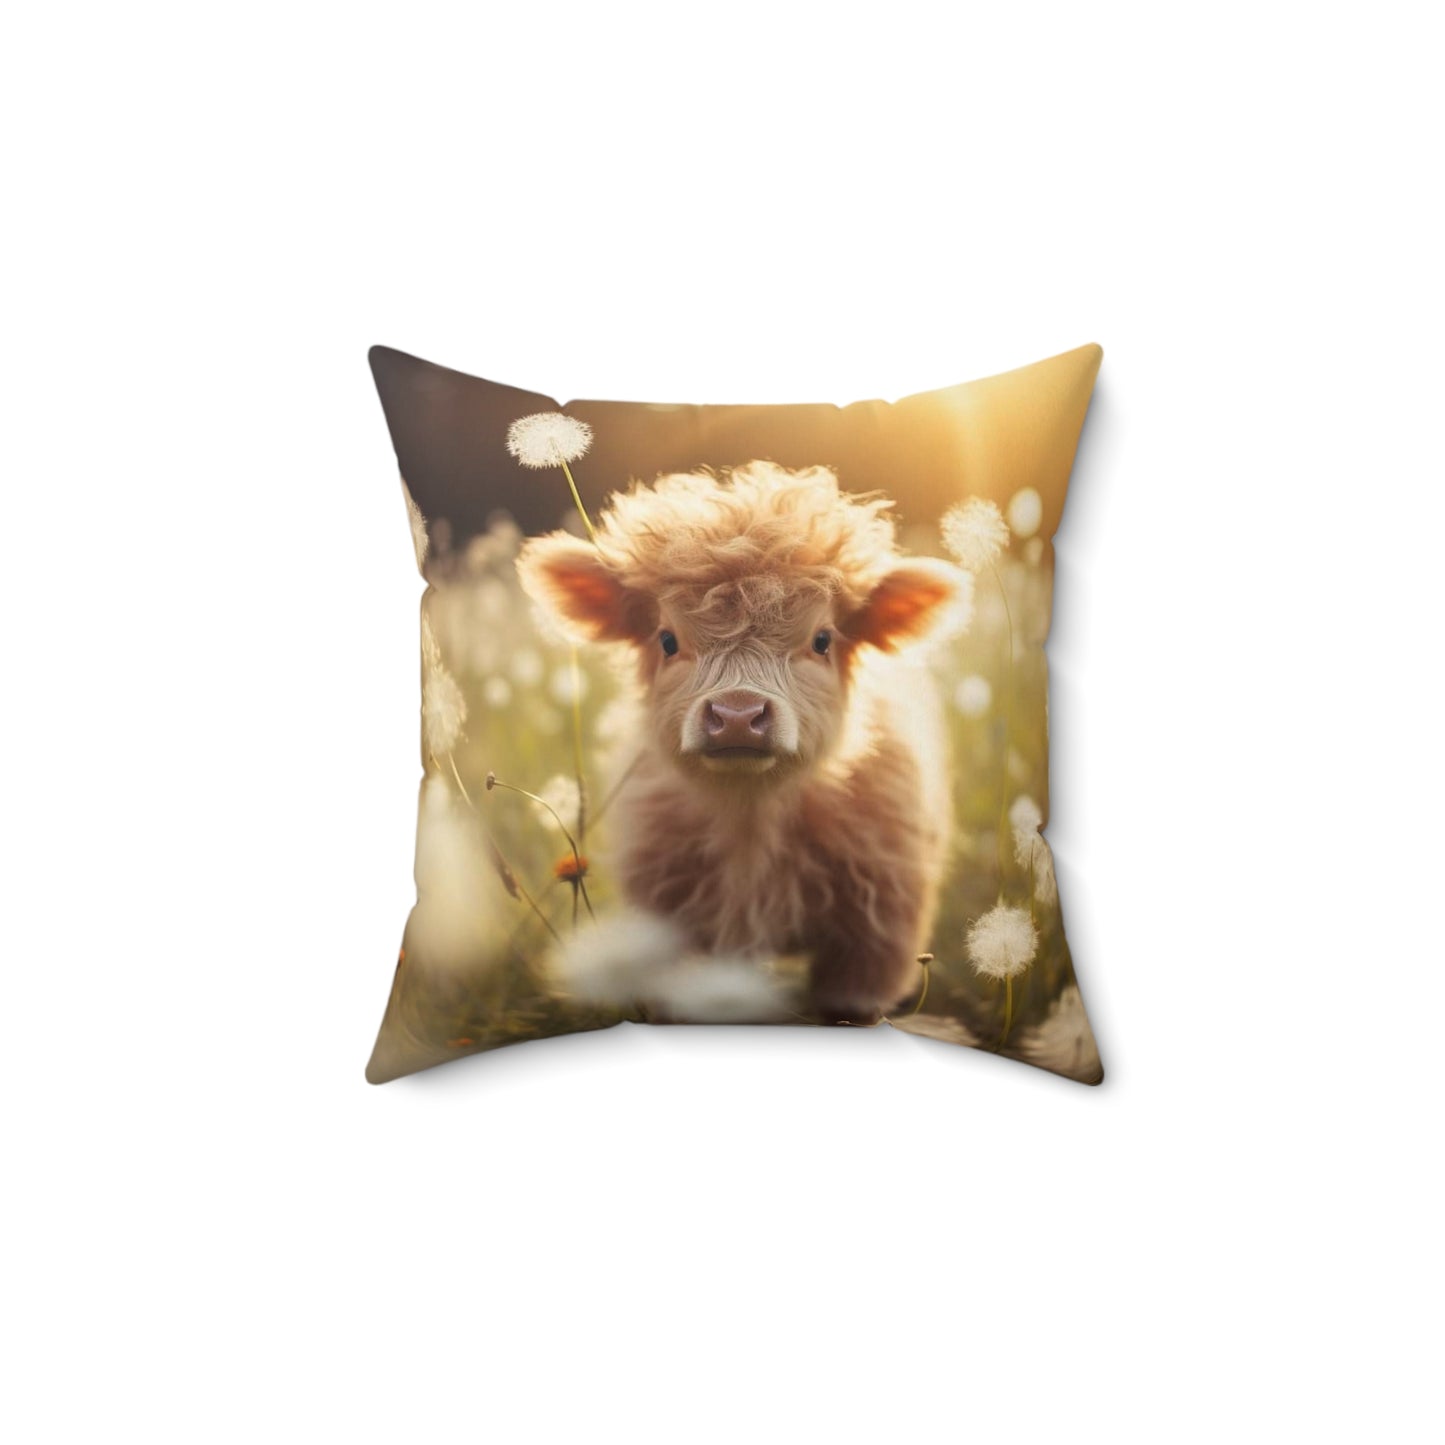 Furry Calf Spun Polyester Square Pillow